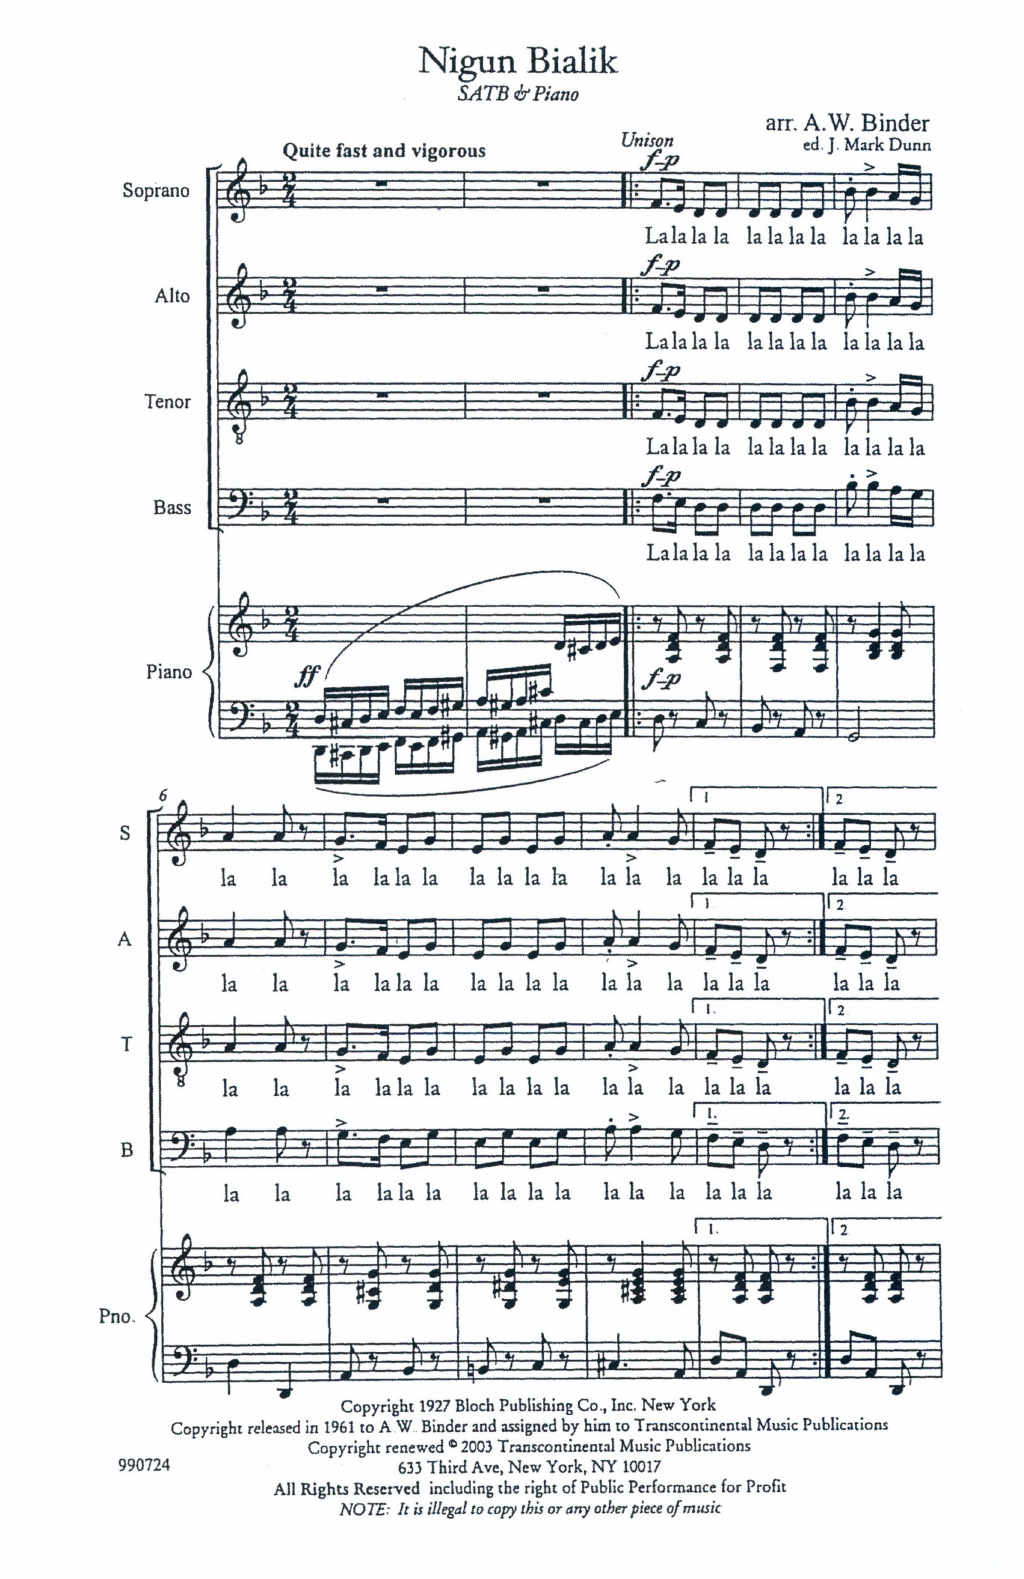 Download A.W. Binder Nigun Bialik Sheet Music and learn how to play SATB Choir PDF digital score in minutes